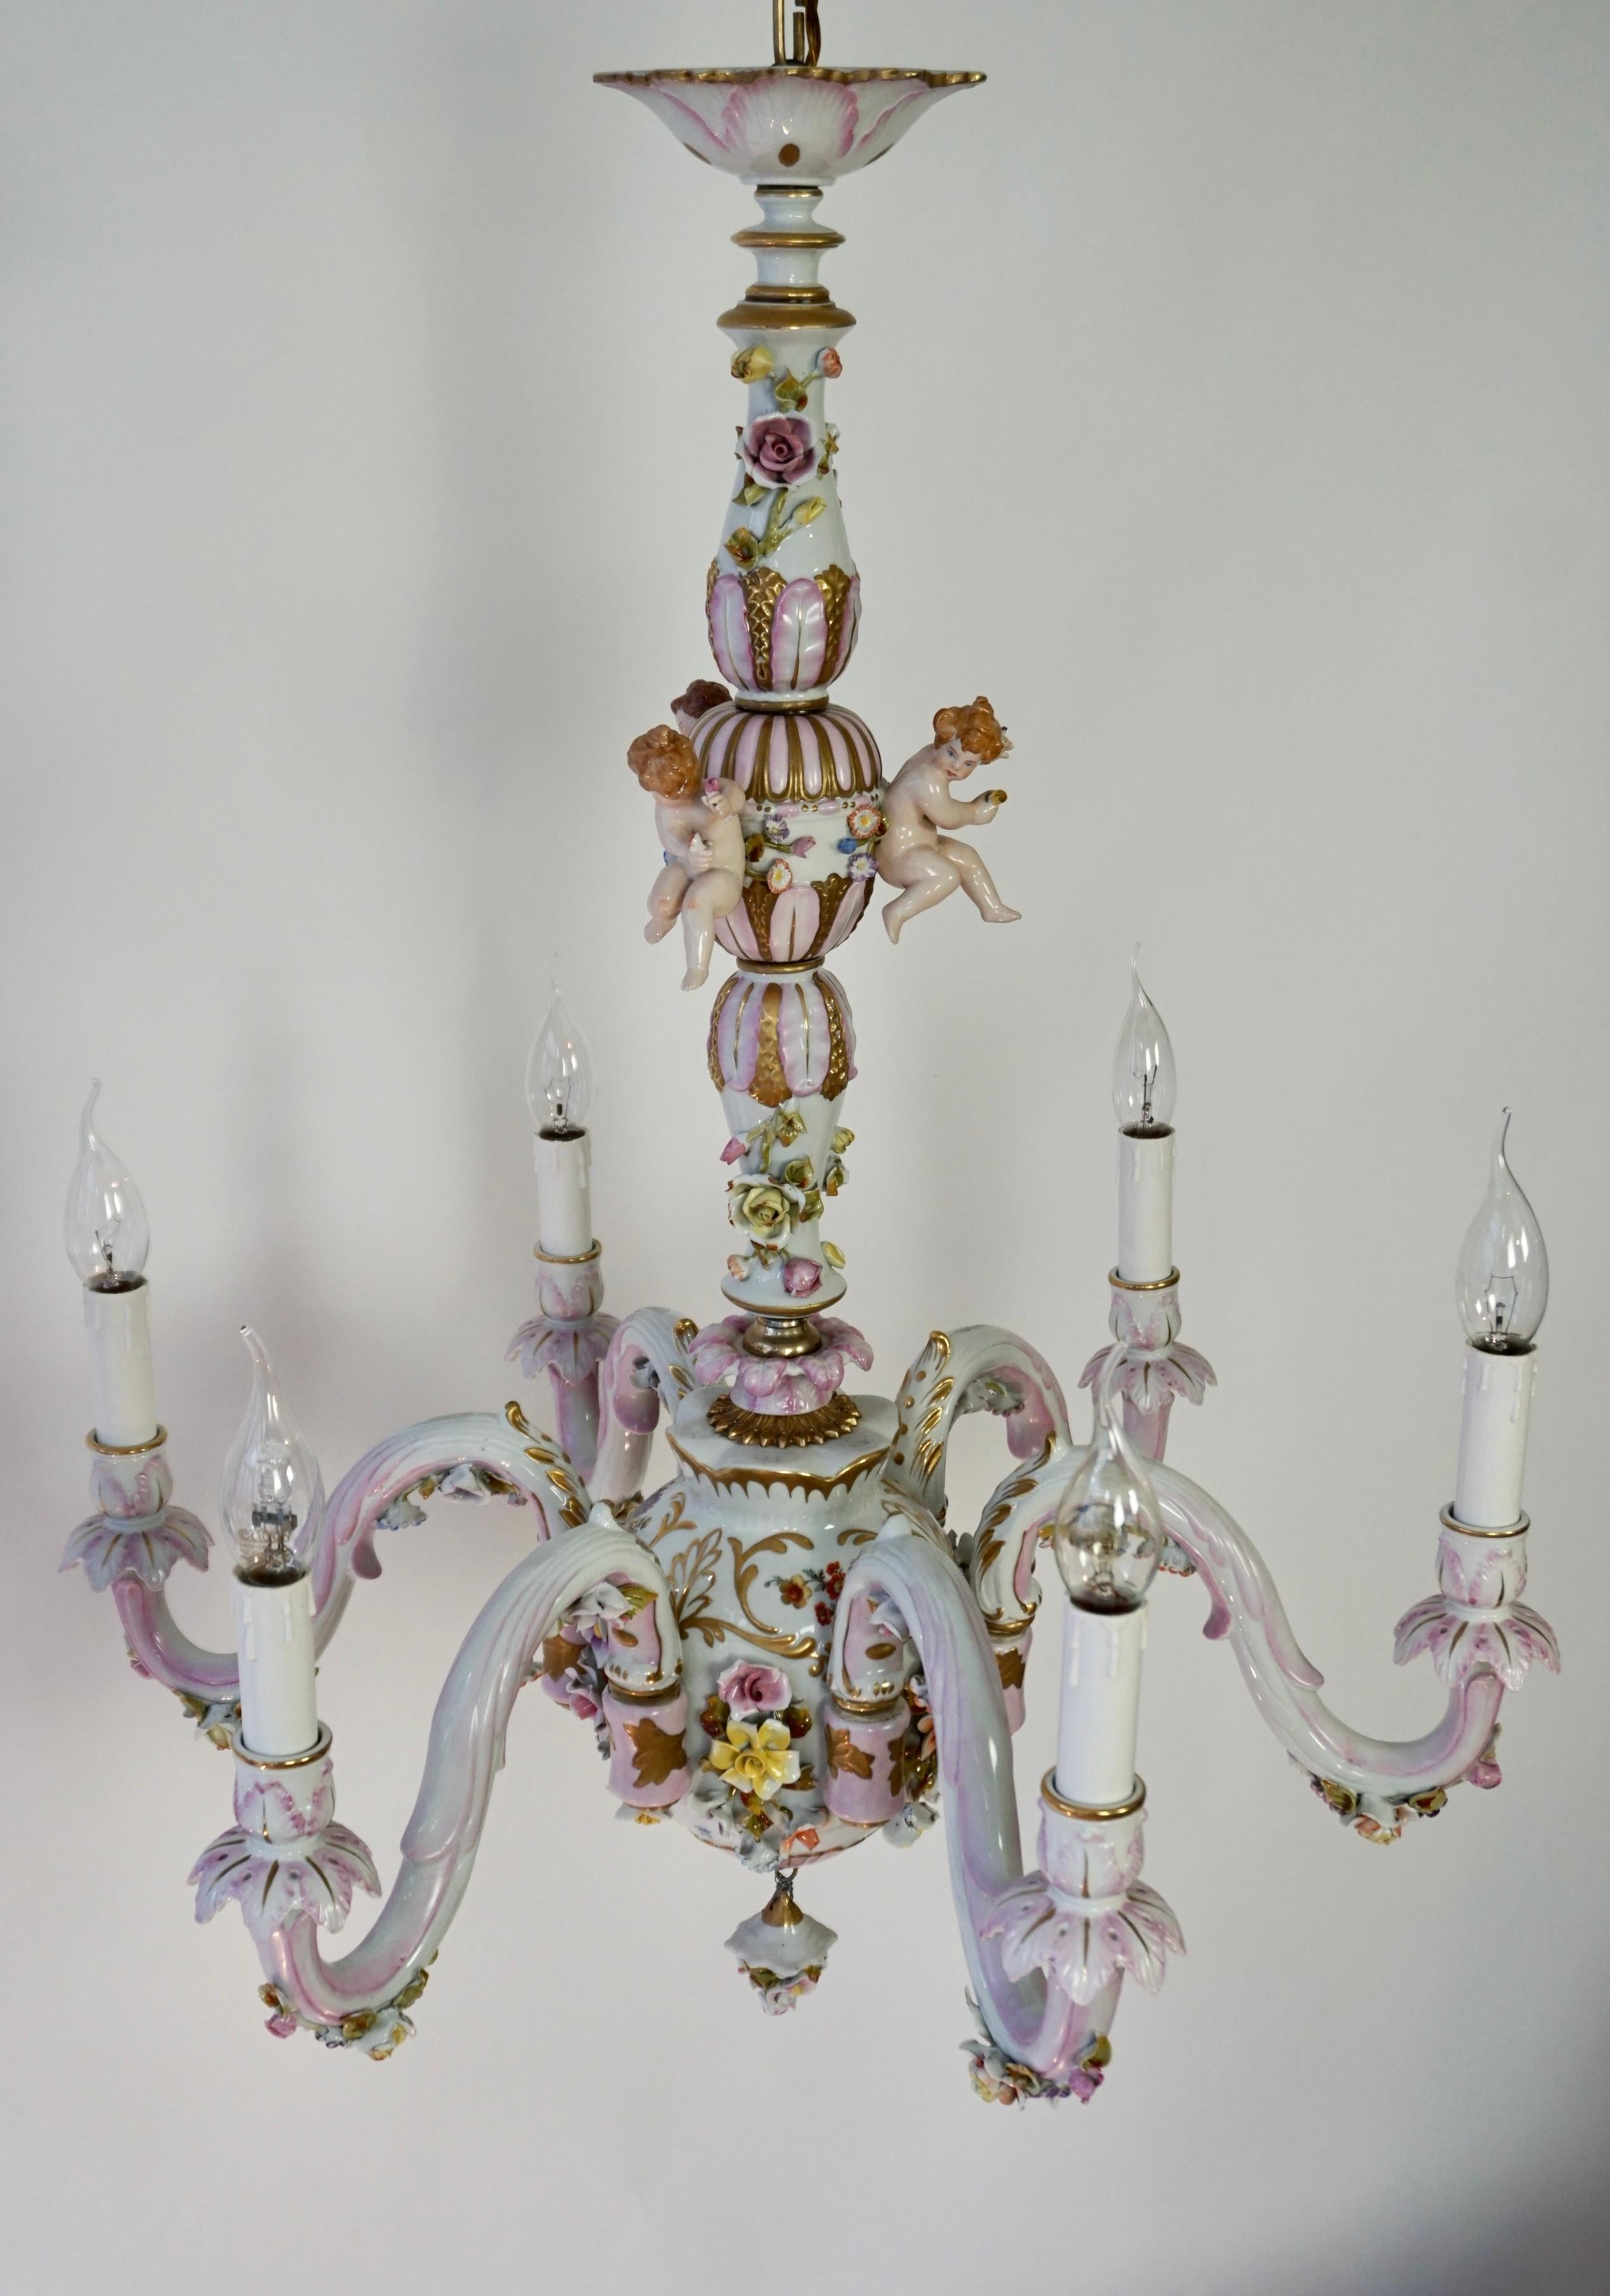 capodimonte chandelier with cherubs